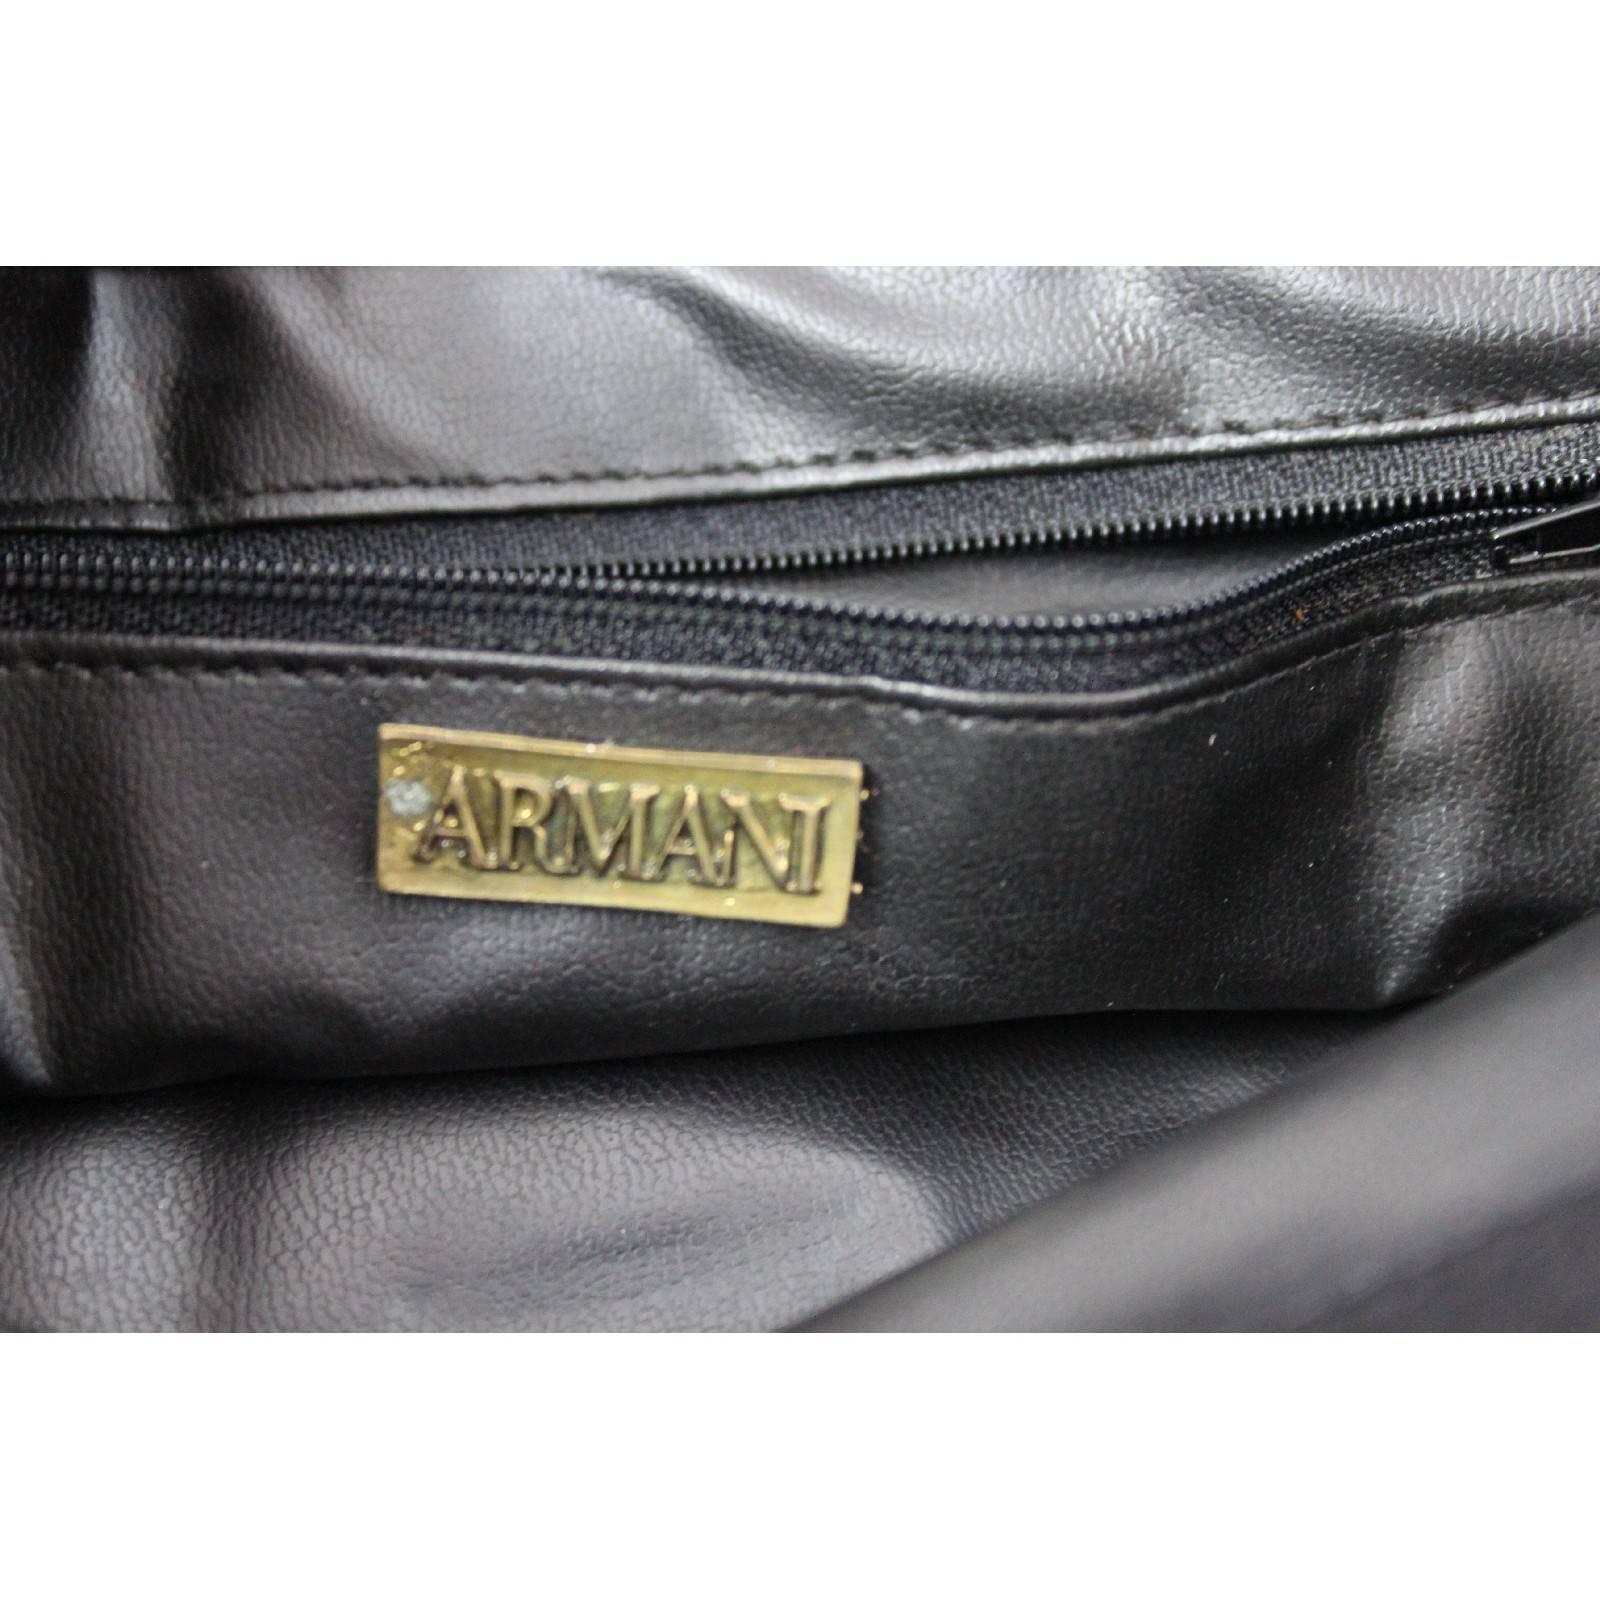 Giorgio Armani leather black shoulder bag excellent condition 1990s women’s For Sale 3